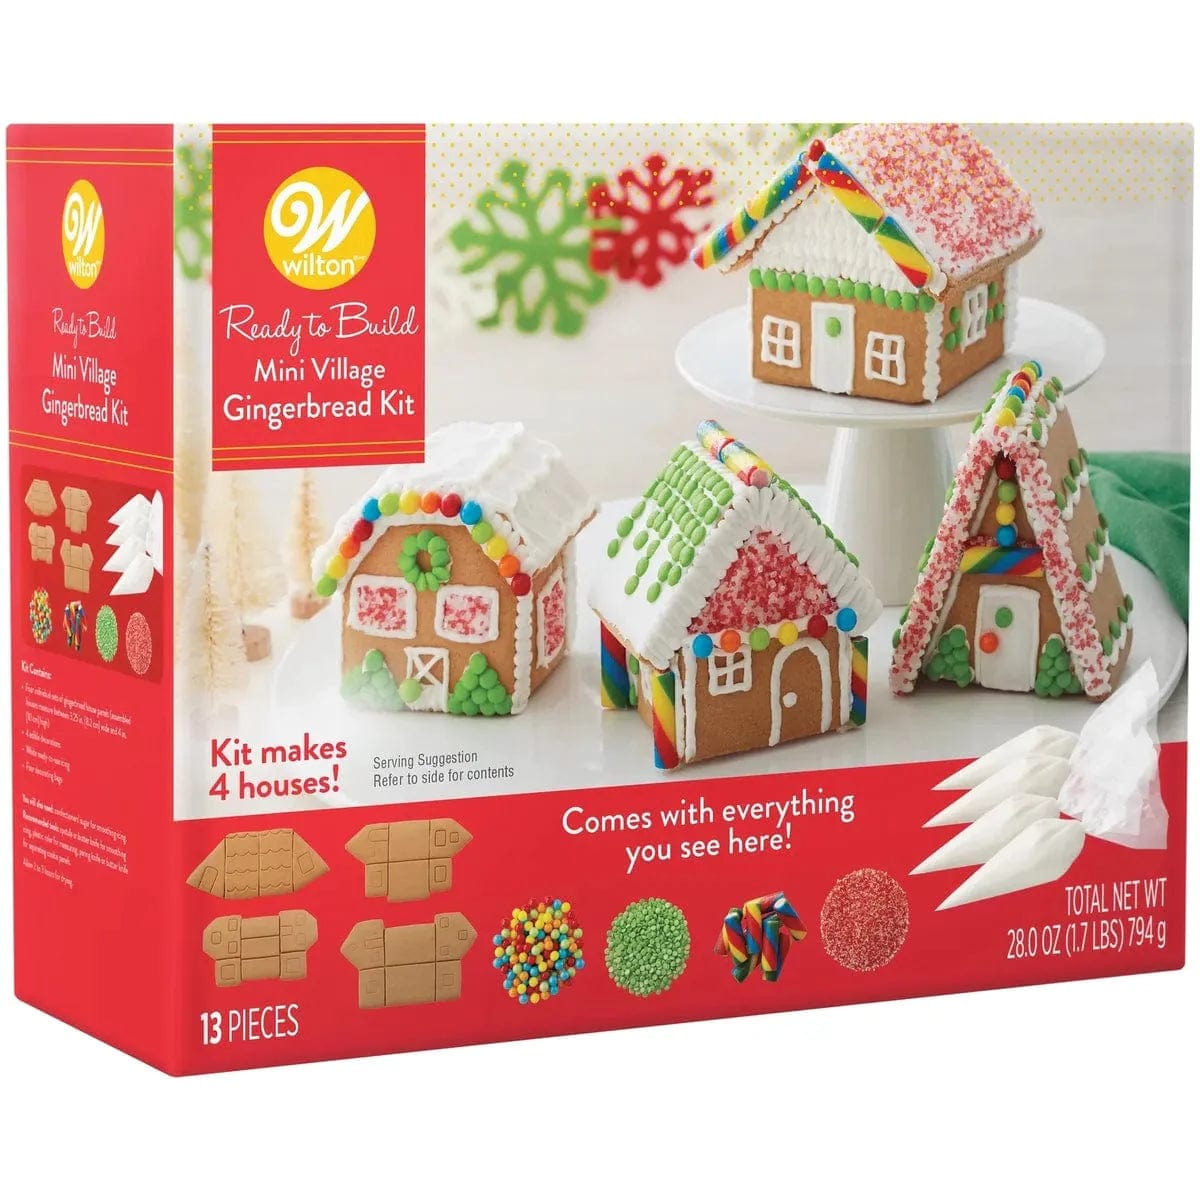 Wilton Cookies Ready to Build Gingerbread House Kit - Mini Village